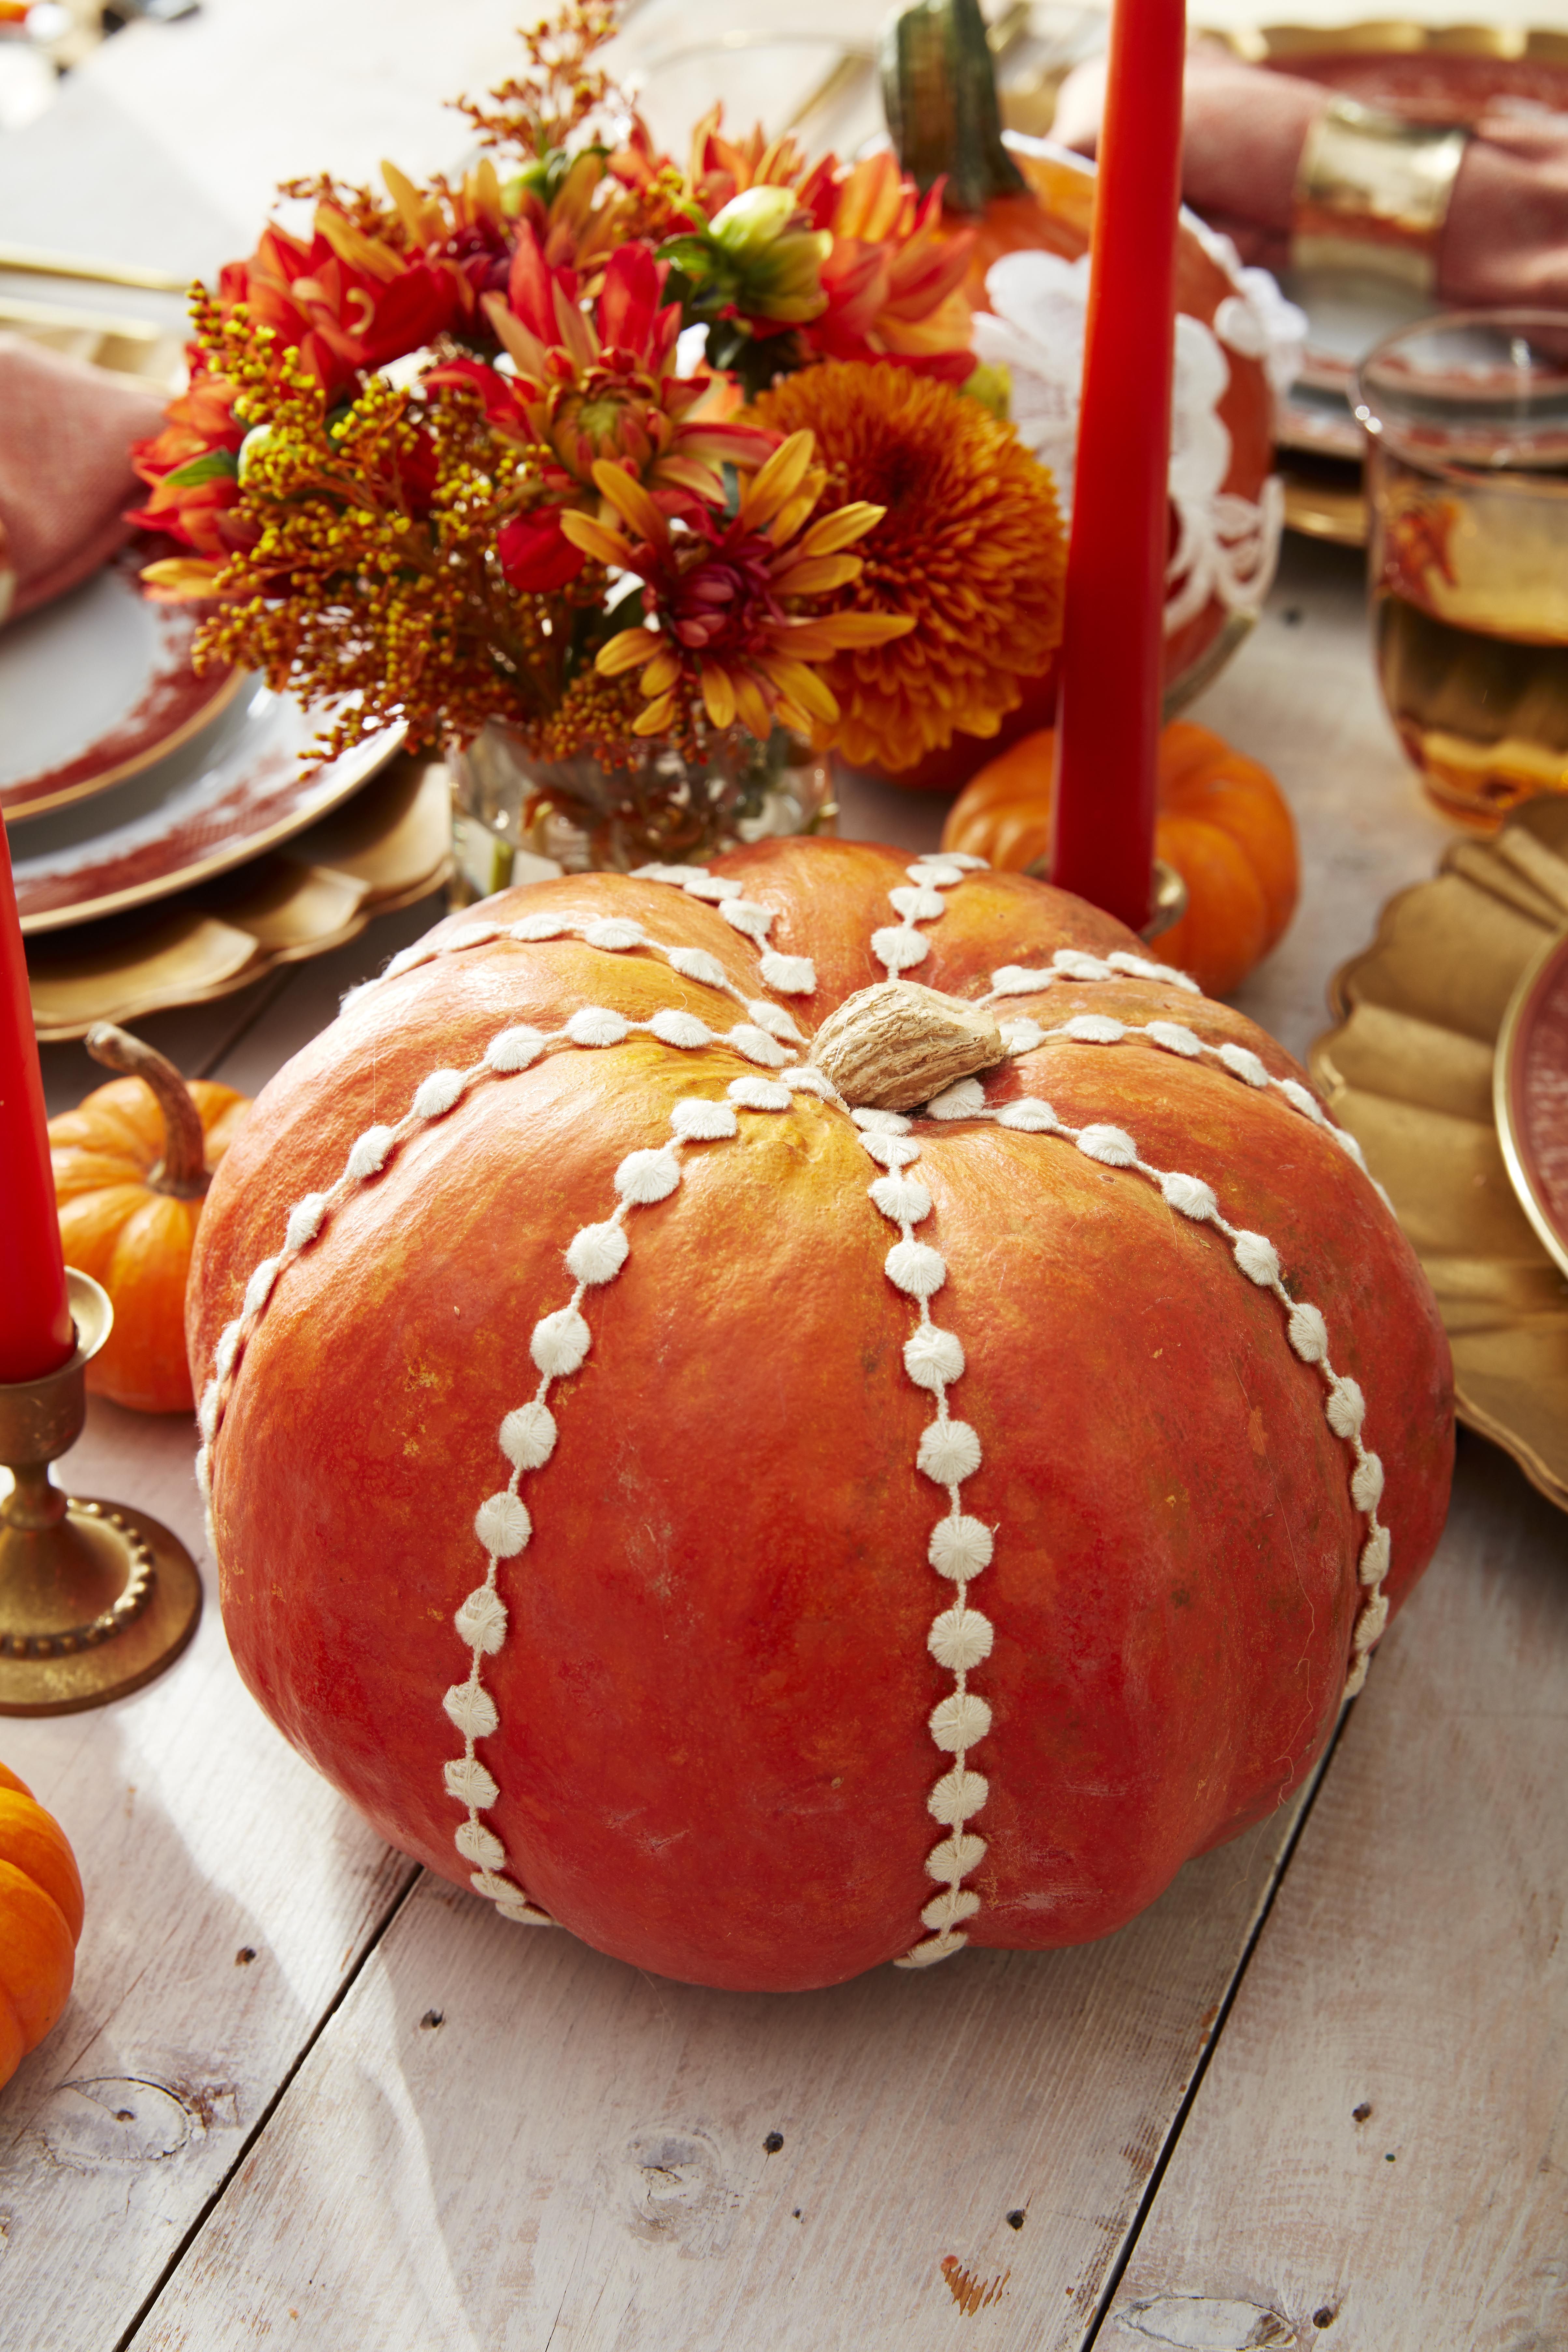 realistic pumpkins 4 by 6 custom Handmade Decoupage Fall Thanksgiving Halloween